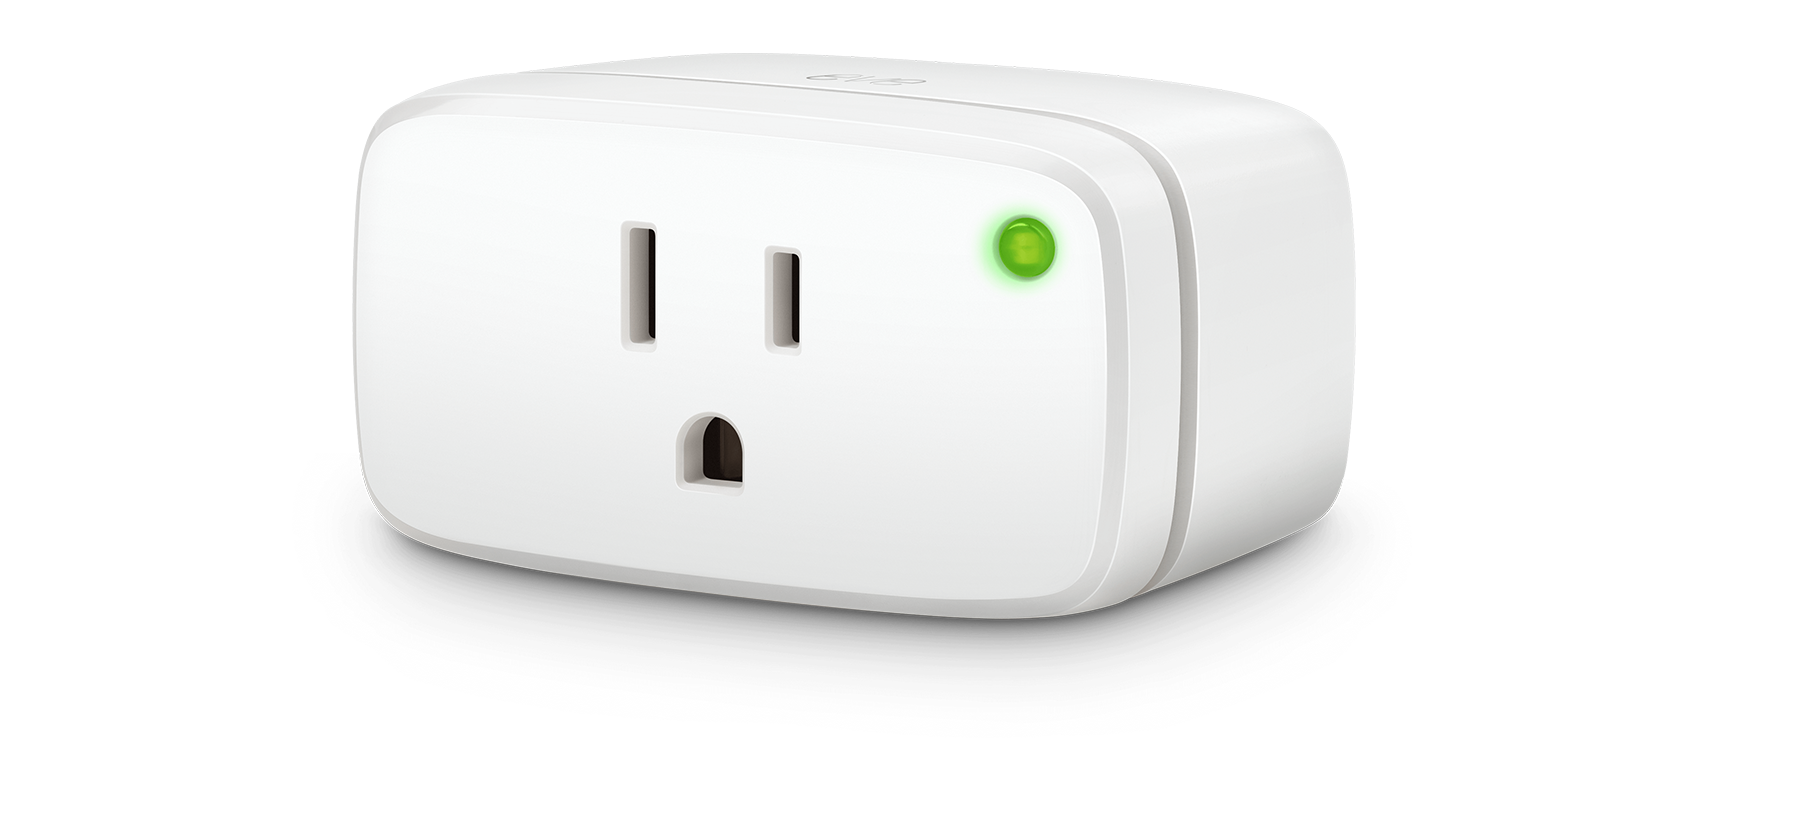 Eve Energy (Matter) Smart Plug - Apple